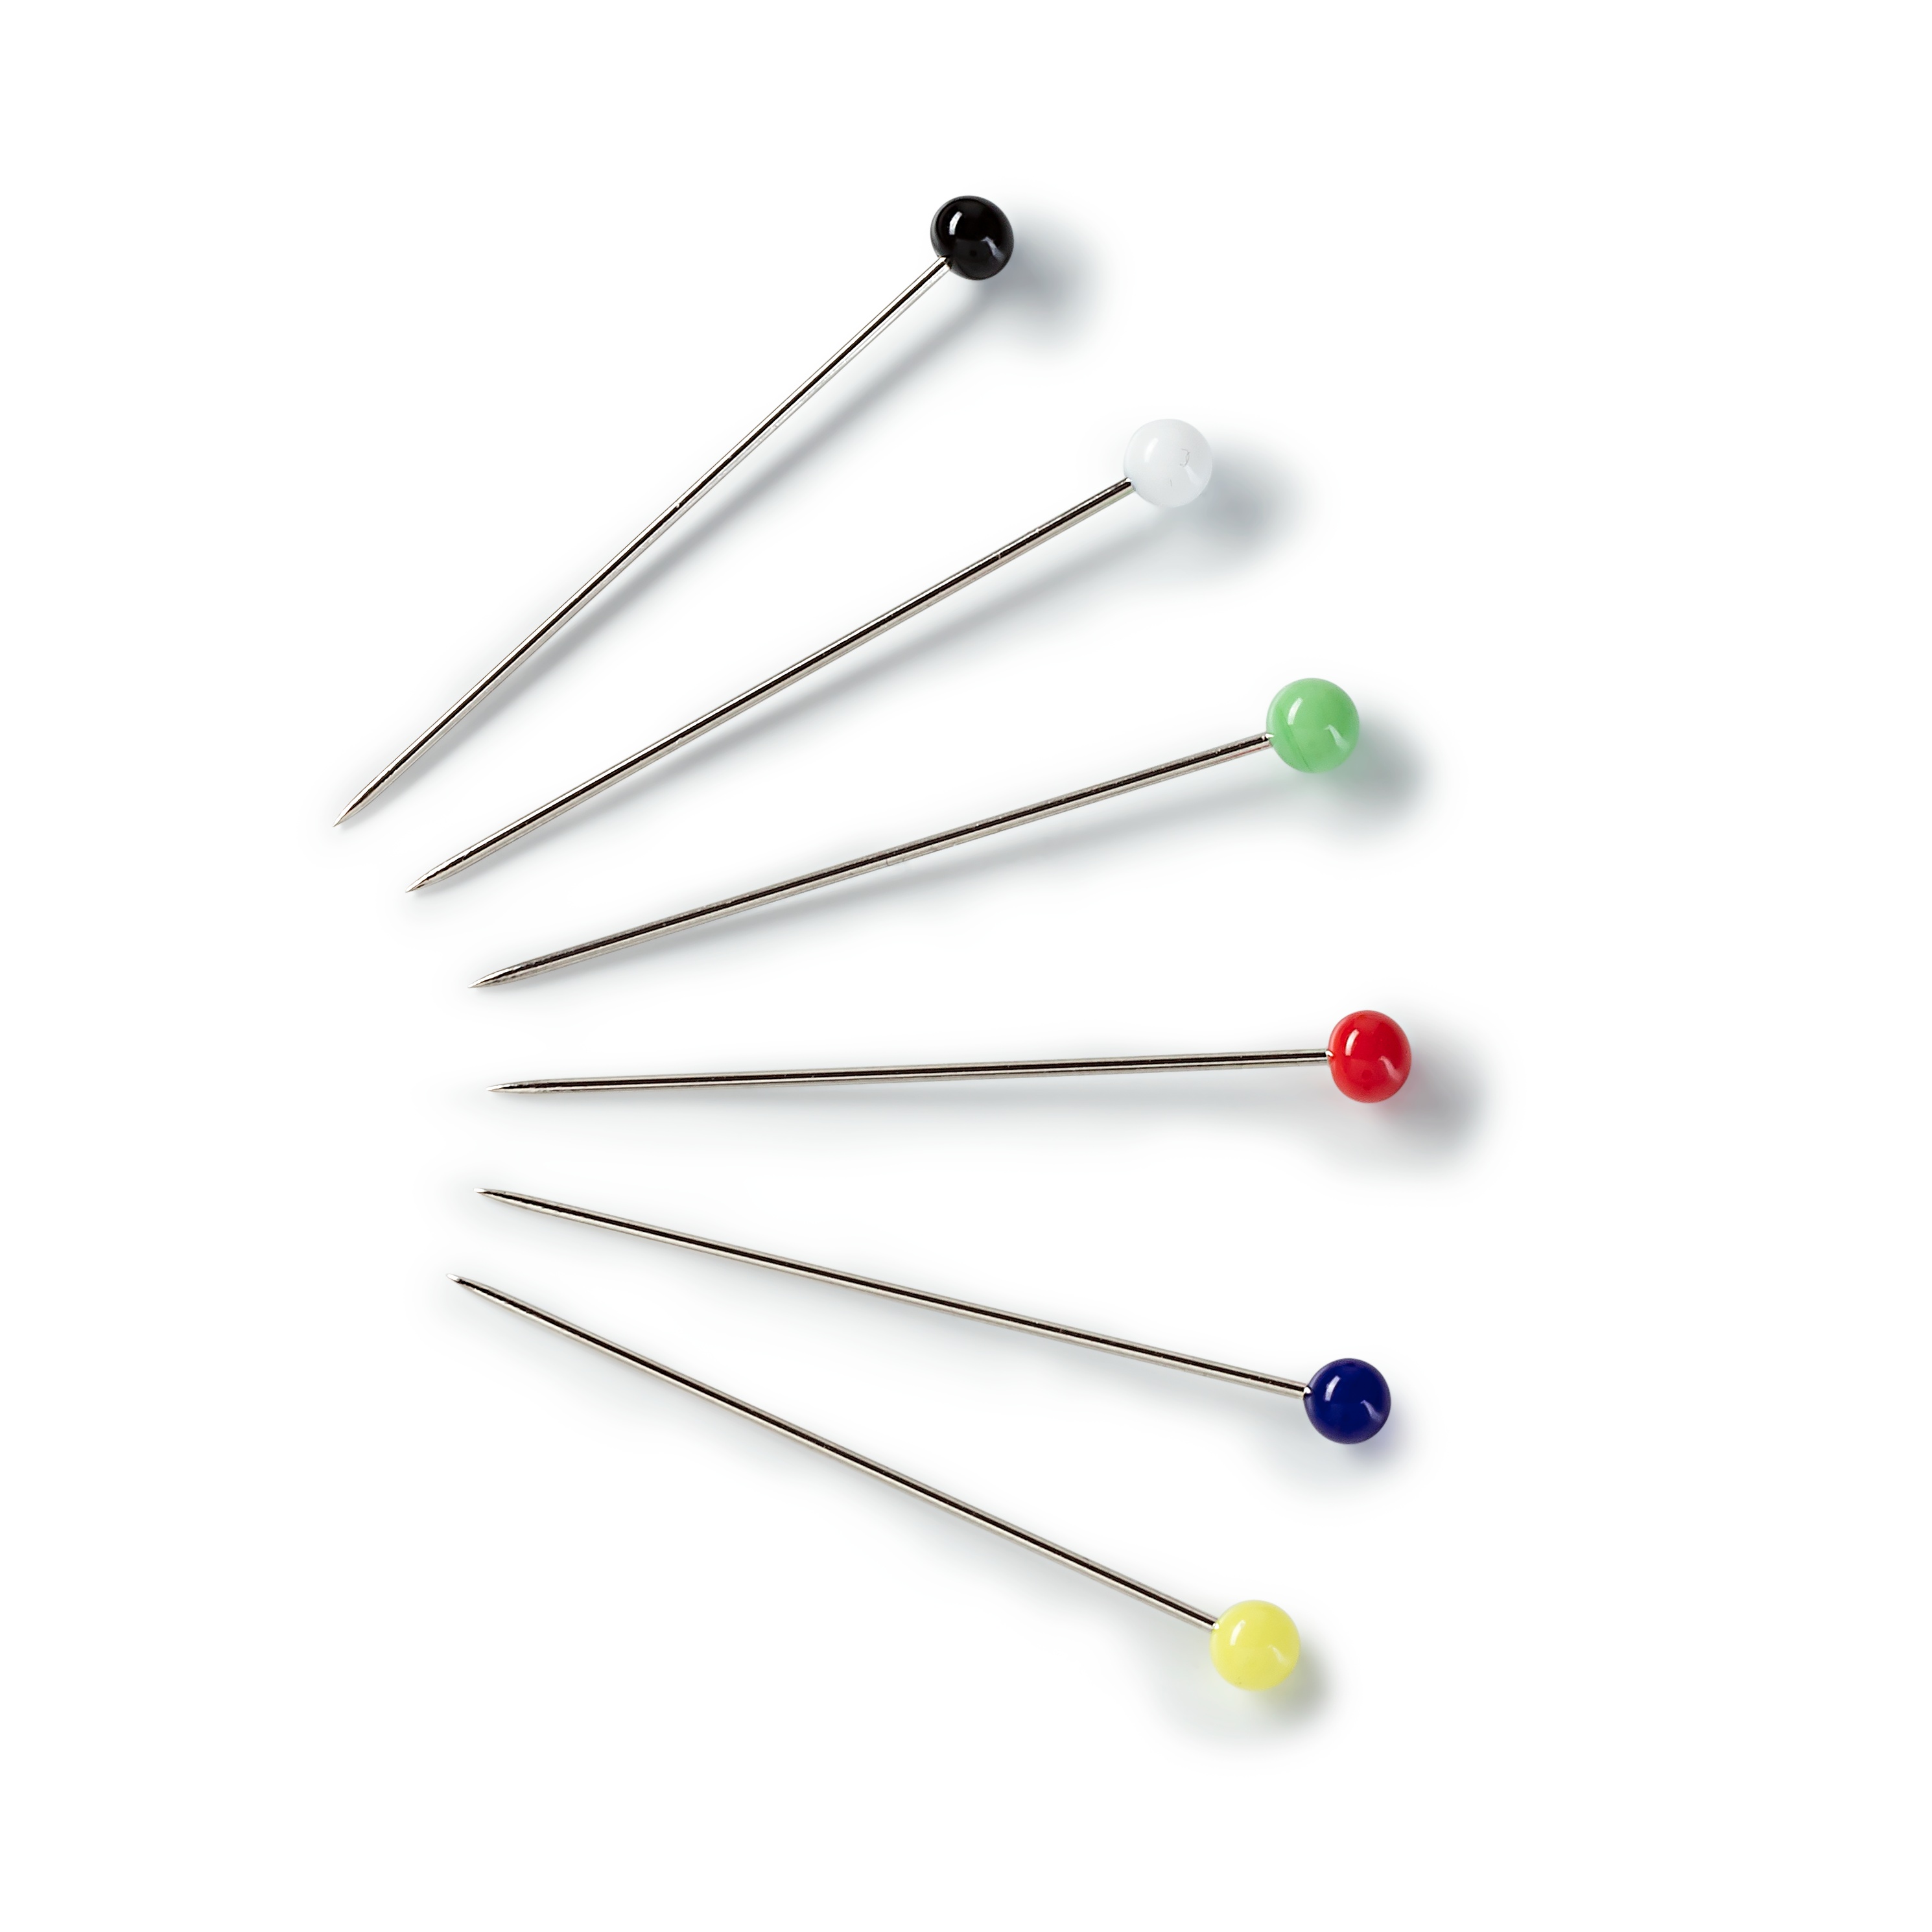 Prym Glass-headed pins, 0.60 x 30mm, multi-colour, 9g / เข็มหัวแก้ว ขนาด 0.60 x 30 มิลลิเมตร แบรนด์ Prym จากประเทศเยอรมนี (G029620)